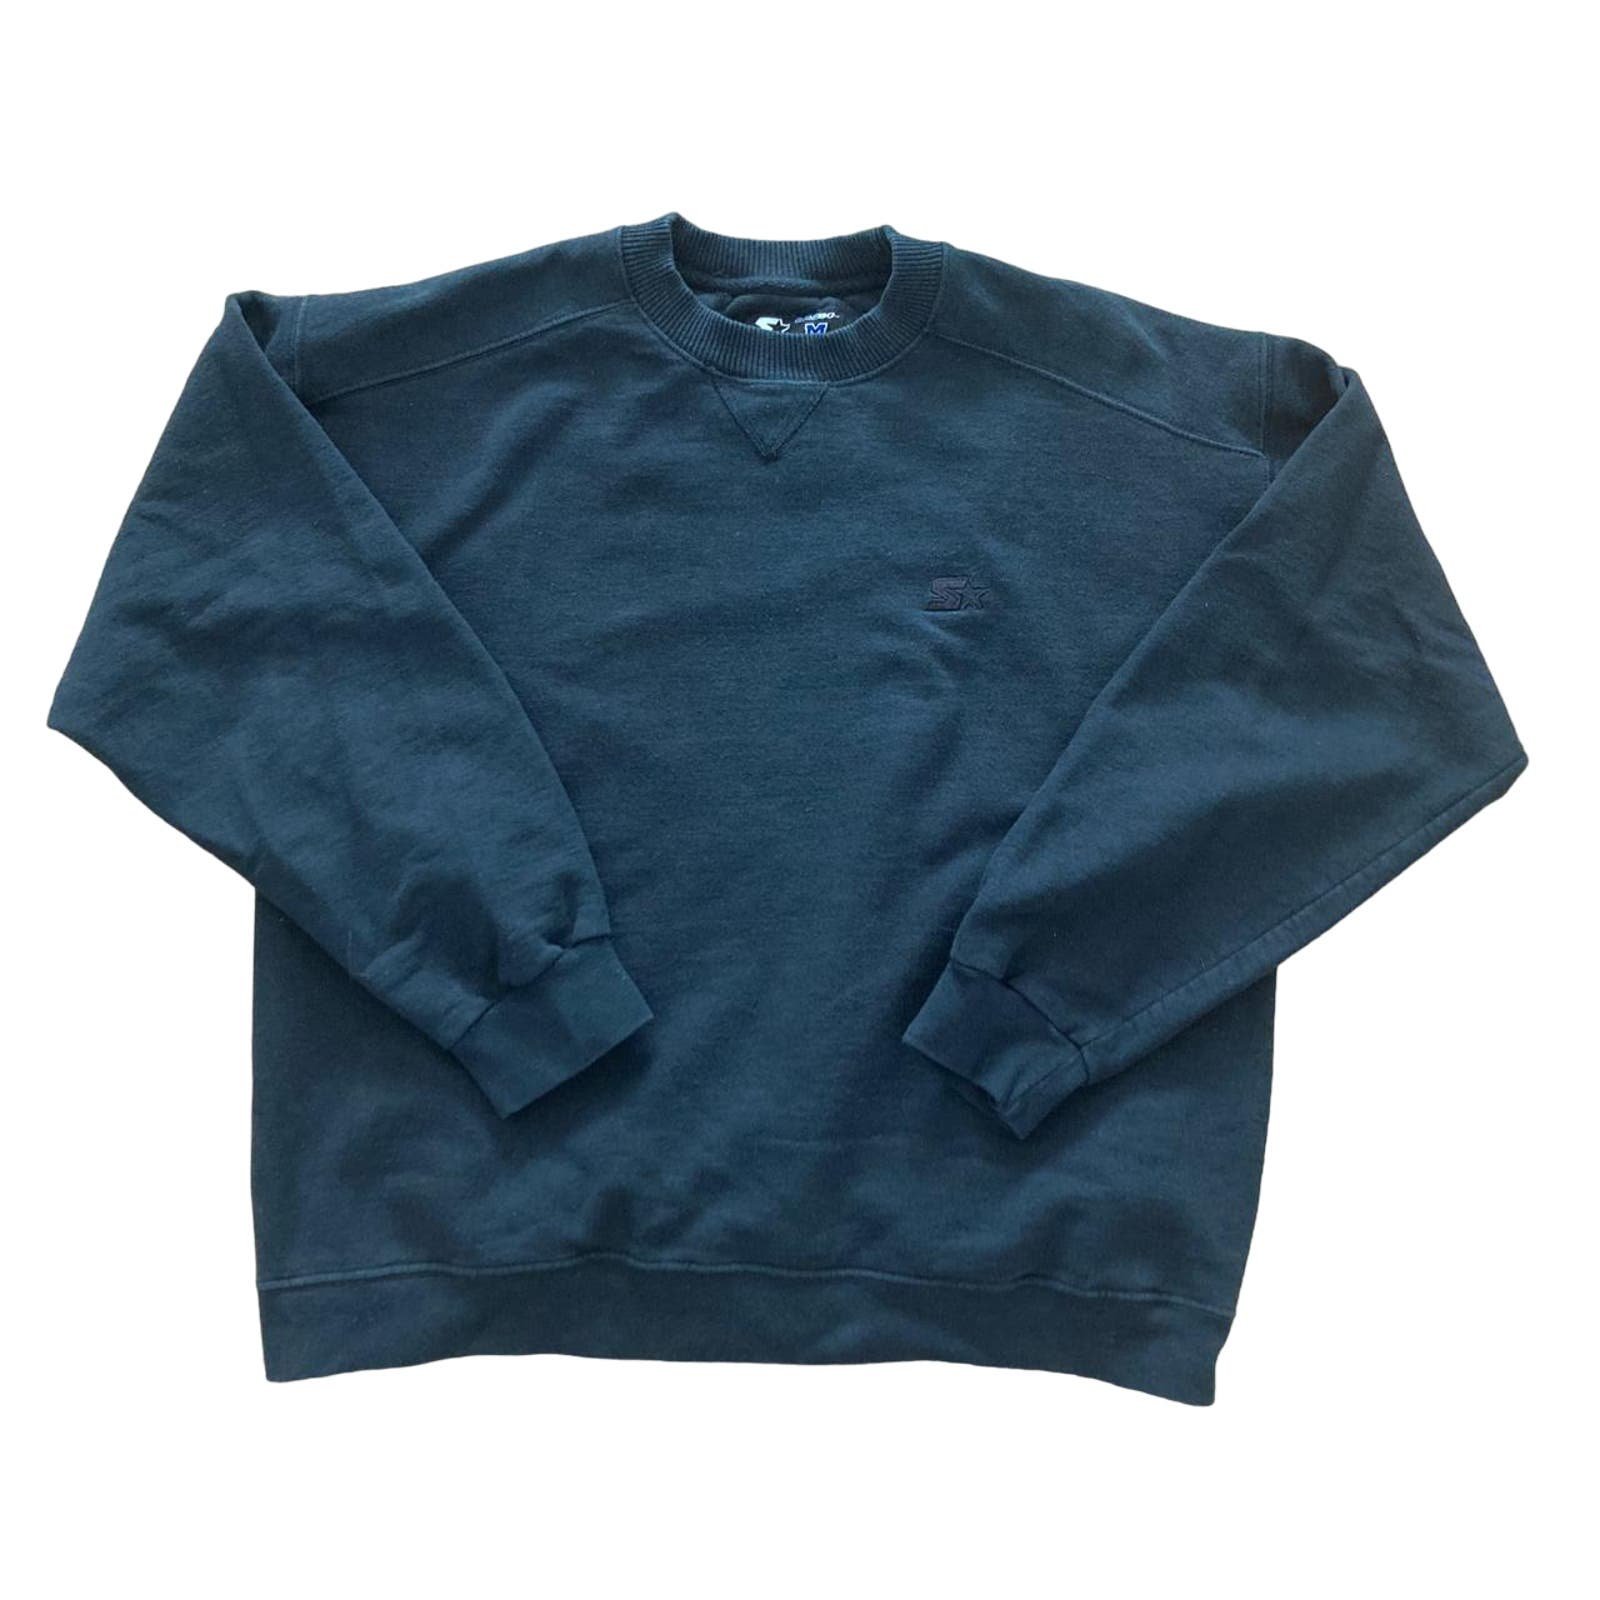 Starter Black Sweatshirt size Medium K3yP0DRr9